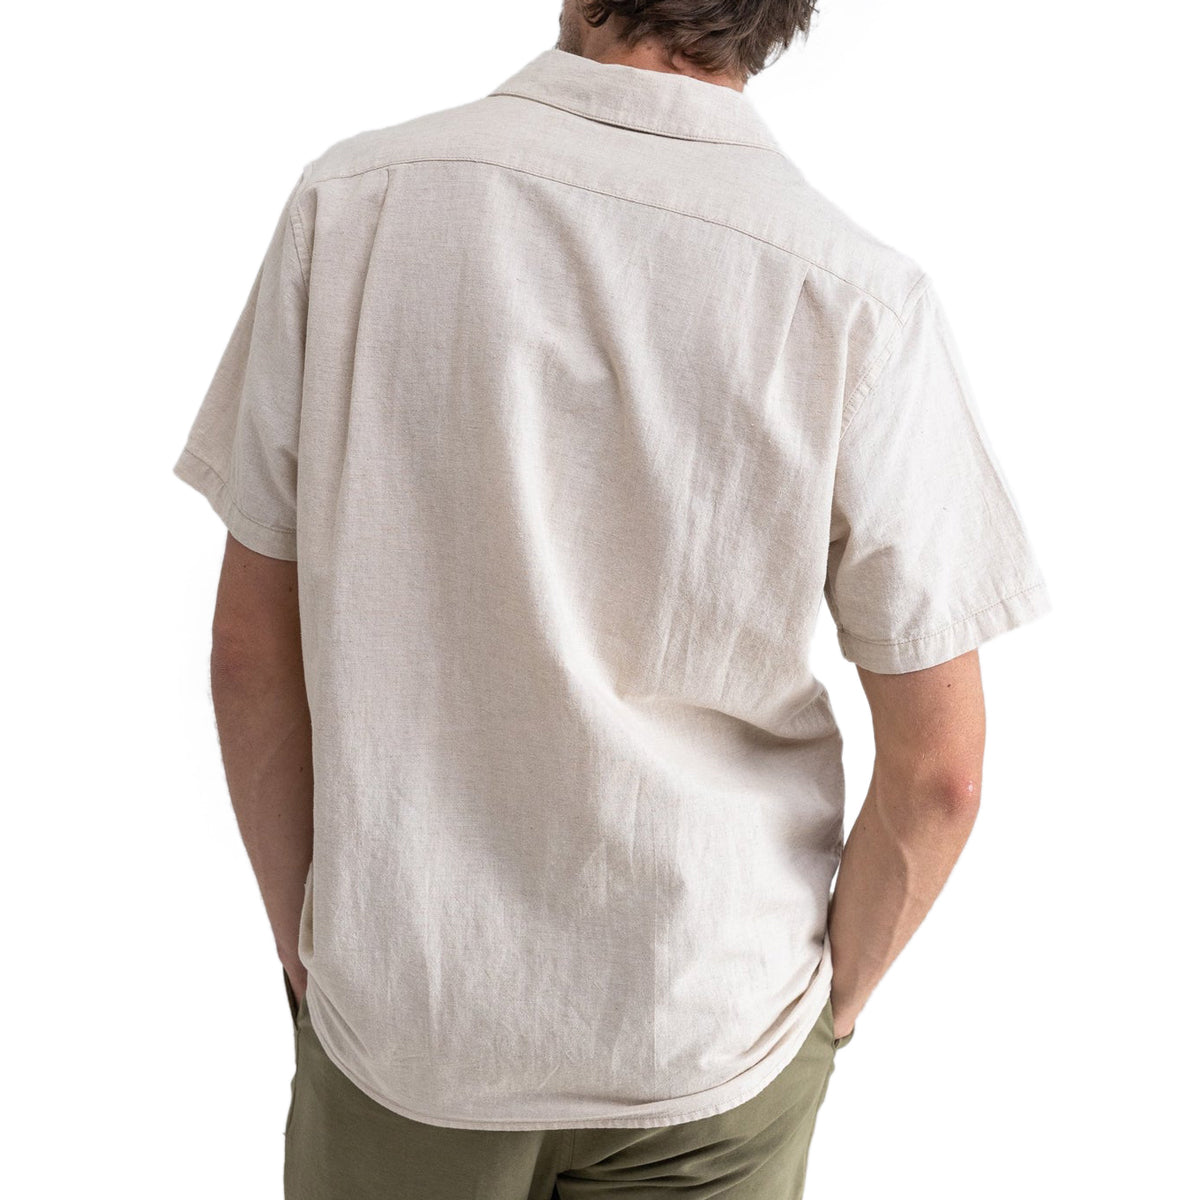 Rhythm Classic Linen Shirt - Sand image 2